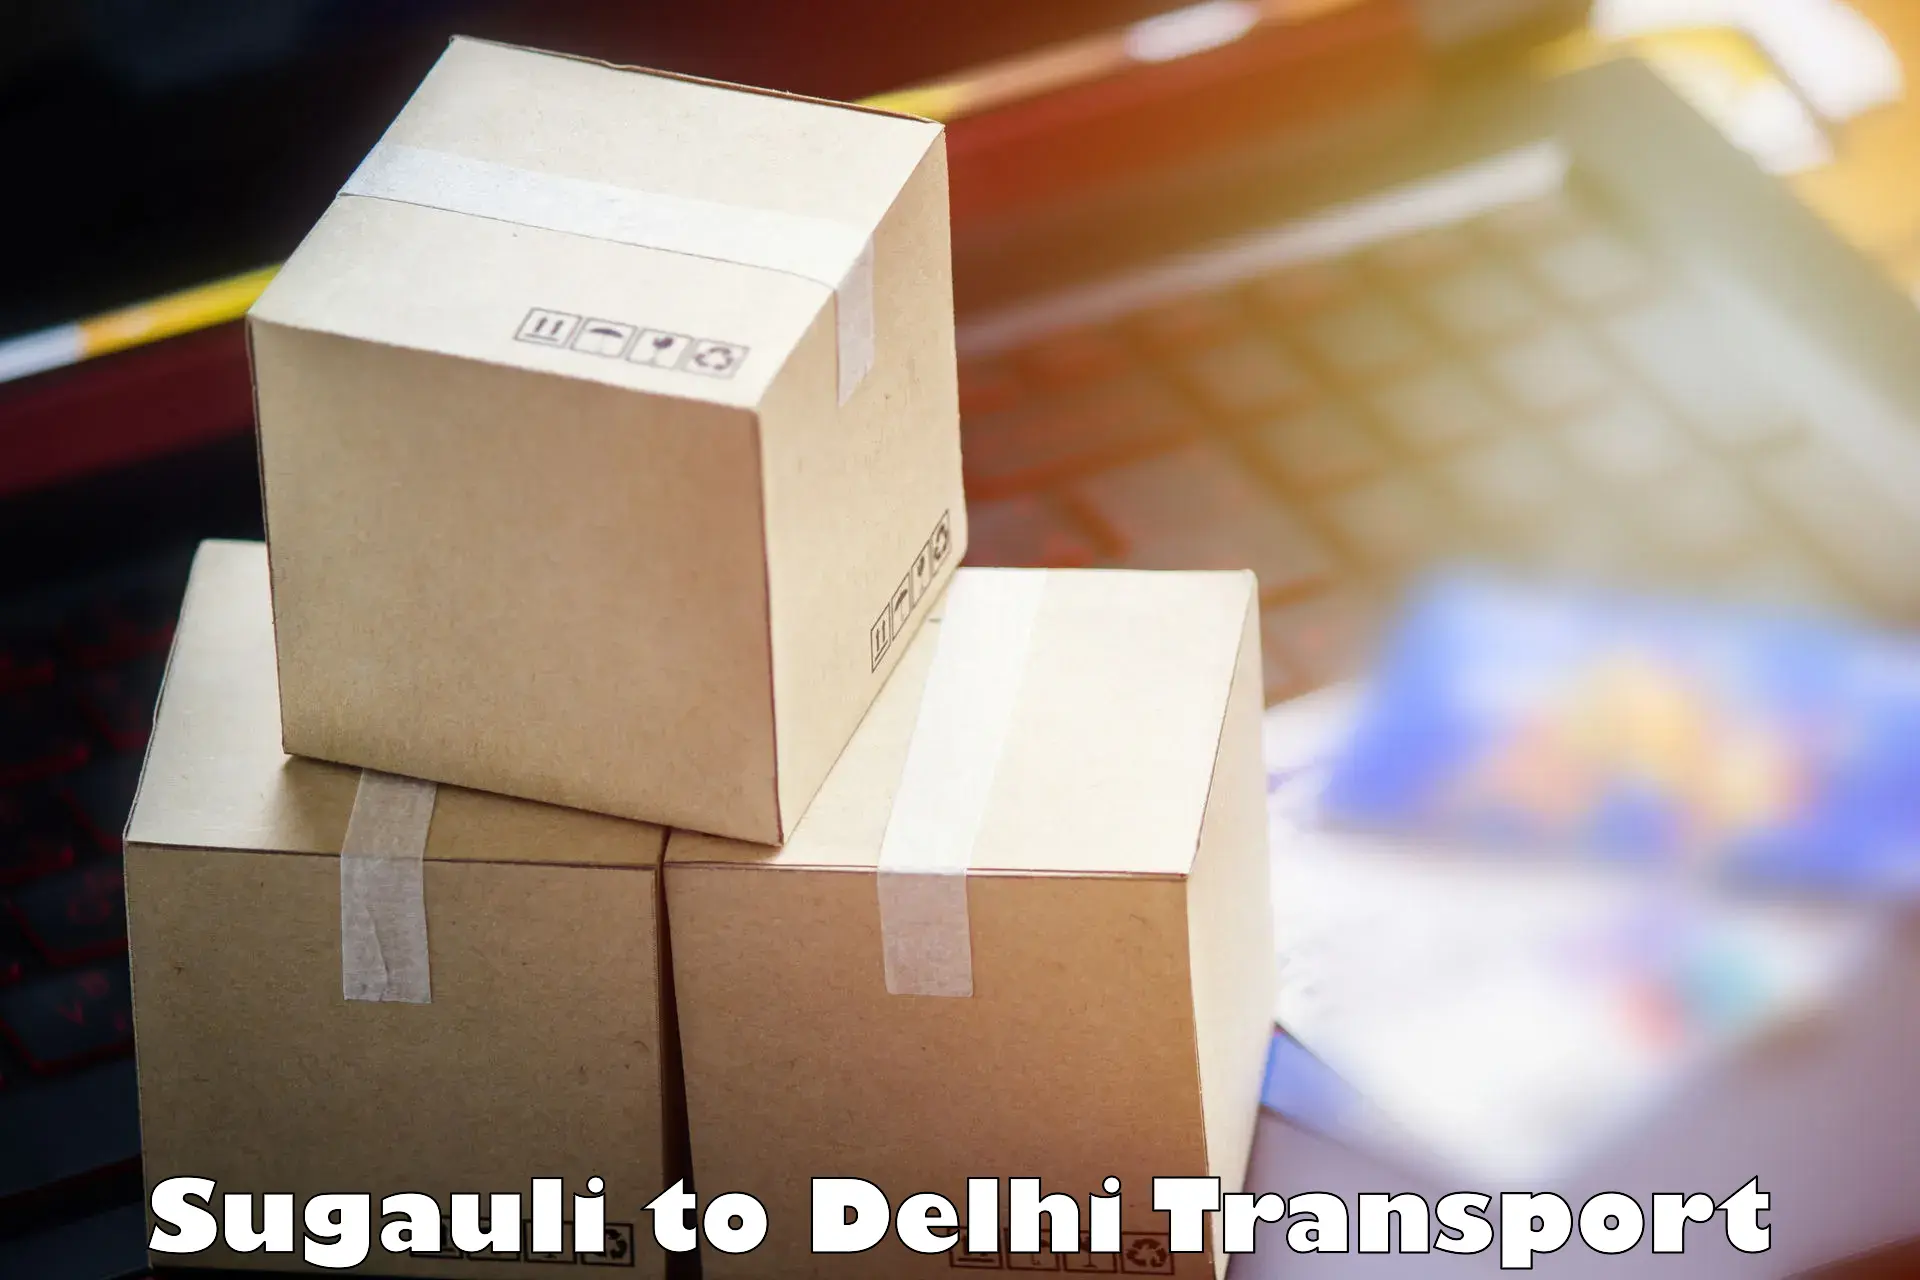 Sending bike to another city Sugauli to University of Delhi